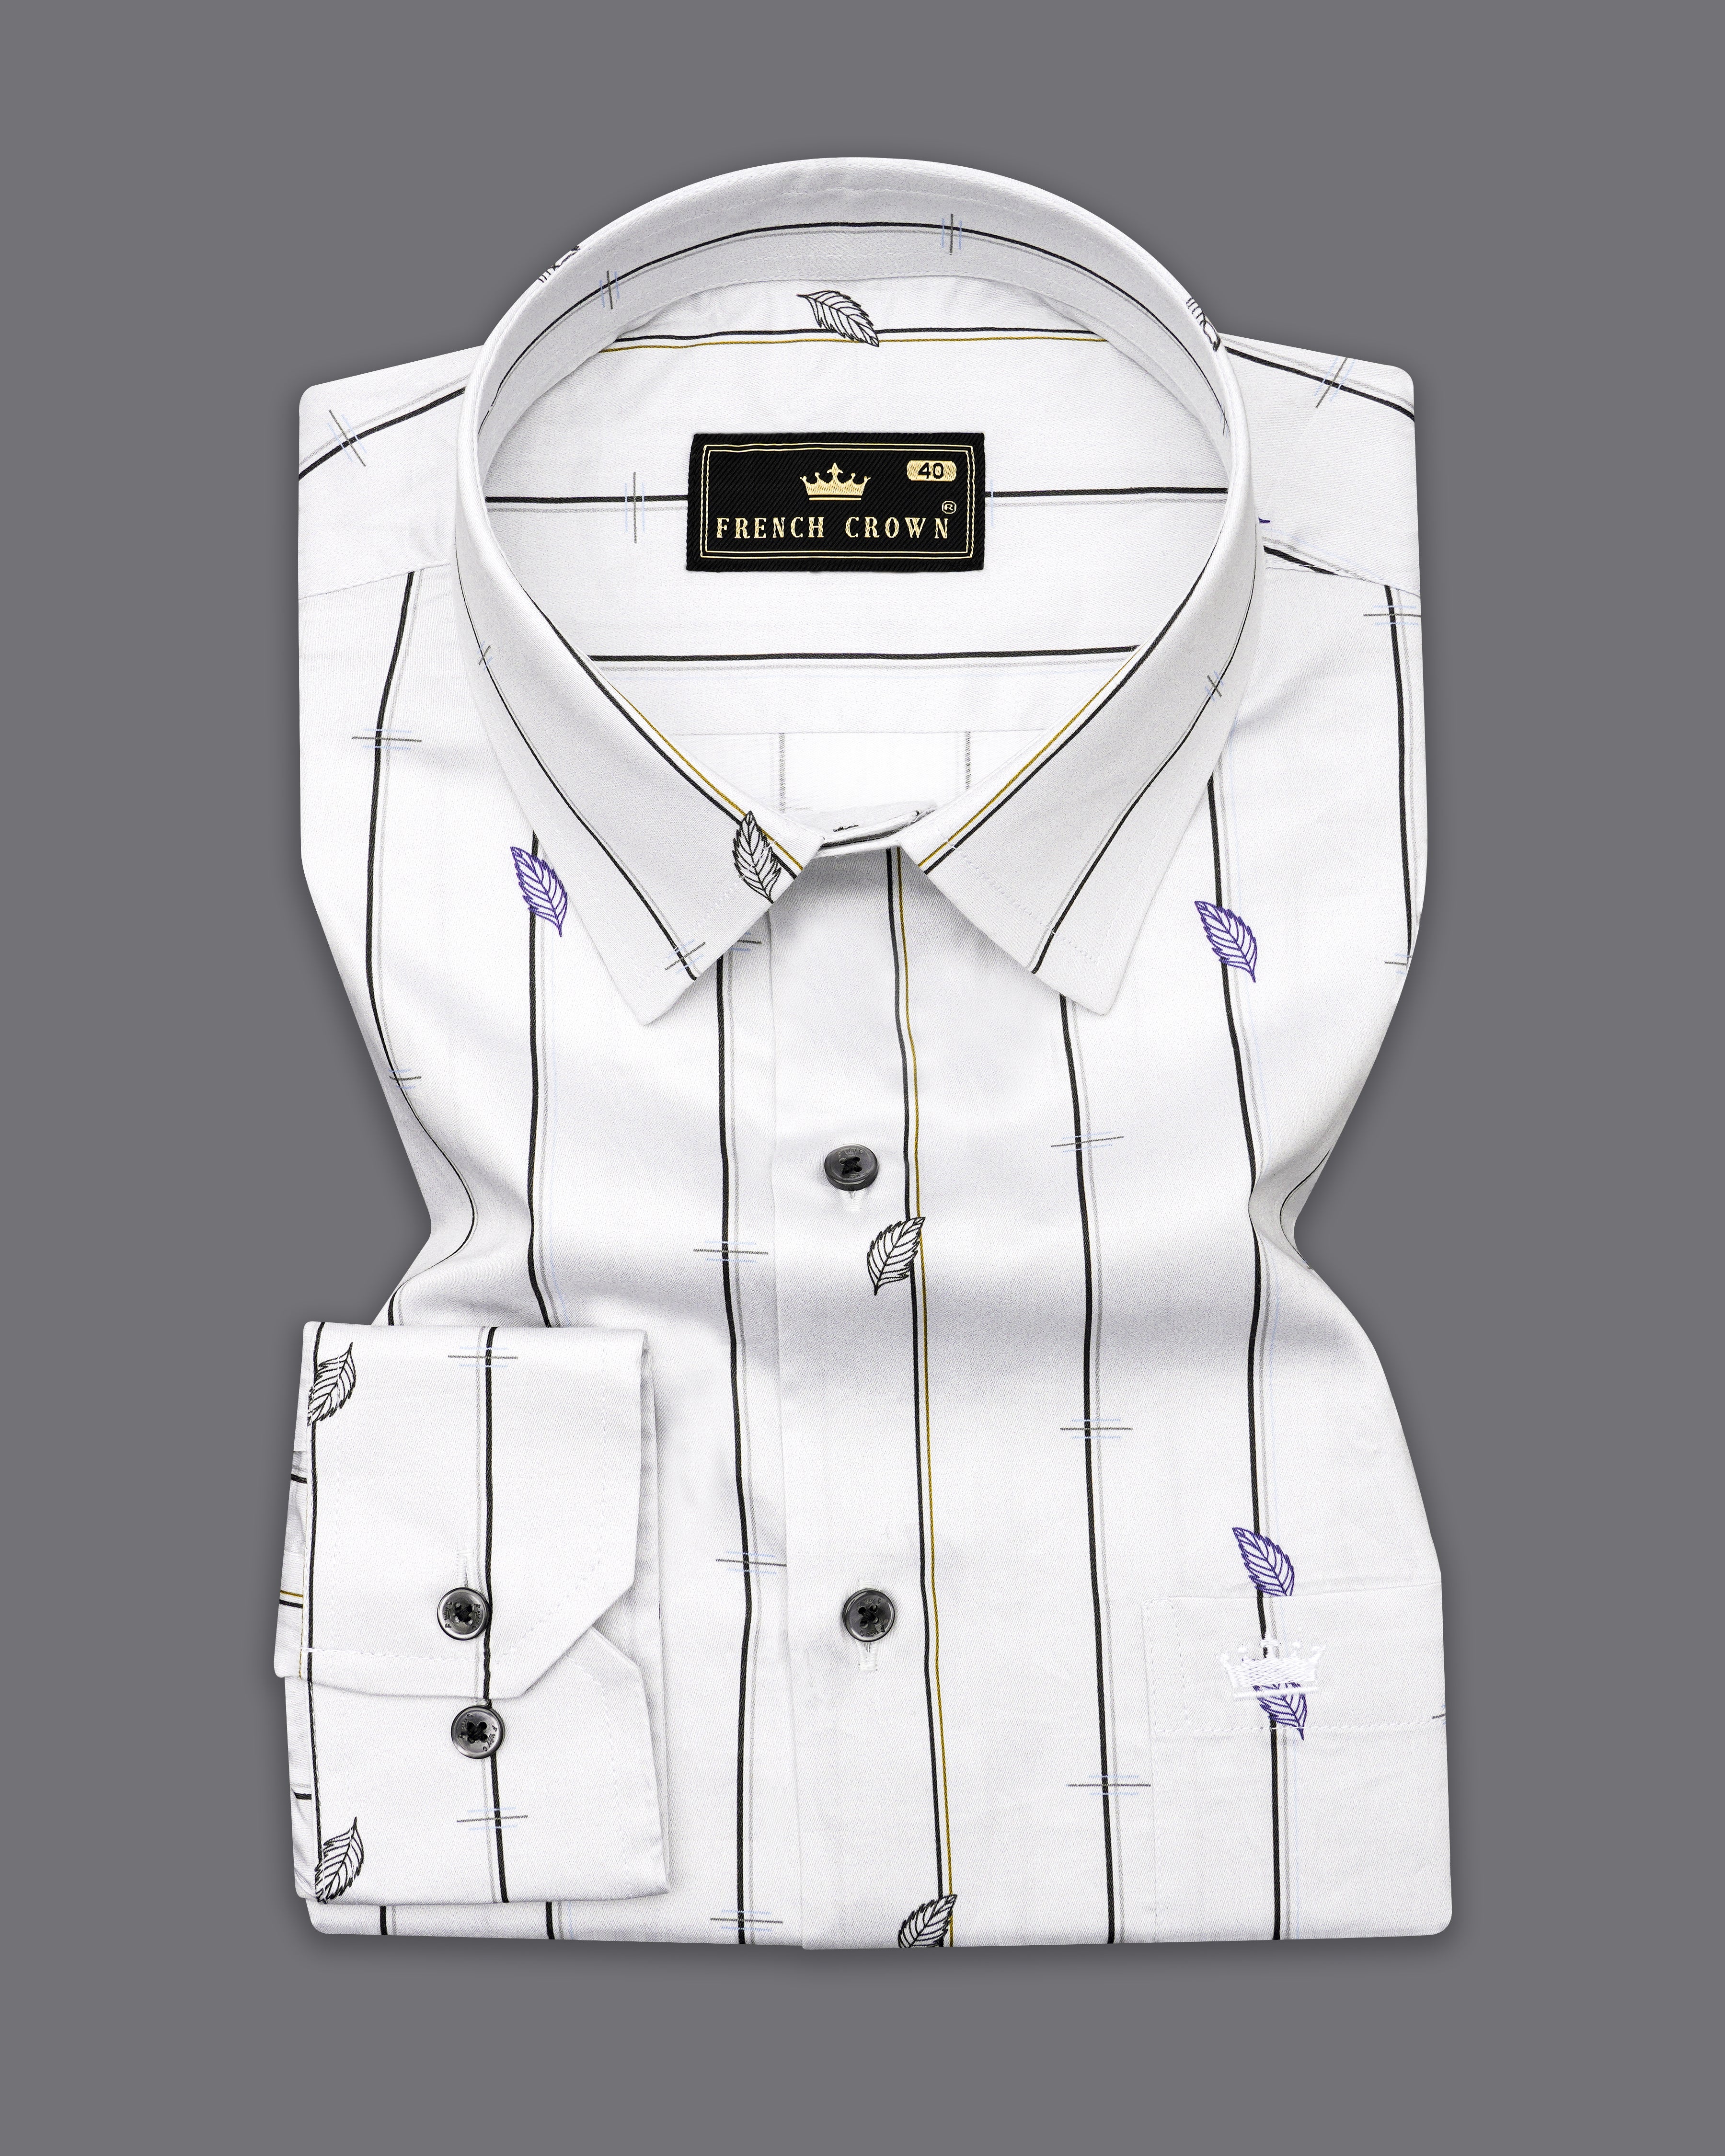 Bright White Striped with Leaves Printed Super Soft Premium Cotton Shirt 9887-BLK-38, 9887-BLK-H-38, 9887-BLK-39, 9887-BLK-H-39, 9887-BLK-40, 9887-BLK-H-40, 9887-BLK-42, 9887-BLK-H-42, 9887-BLK-44, 9887-BLK-H-44, 9887-BLK-46, 9887-BLK-H-46, 9887-BLK-48, 9887-BLK-H-48, 9887-BLK-50, 9887-BLK-H-50, 9887-BLK-52, 9887-BLK-H-52